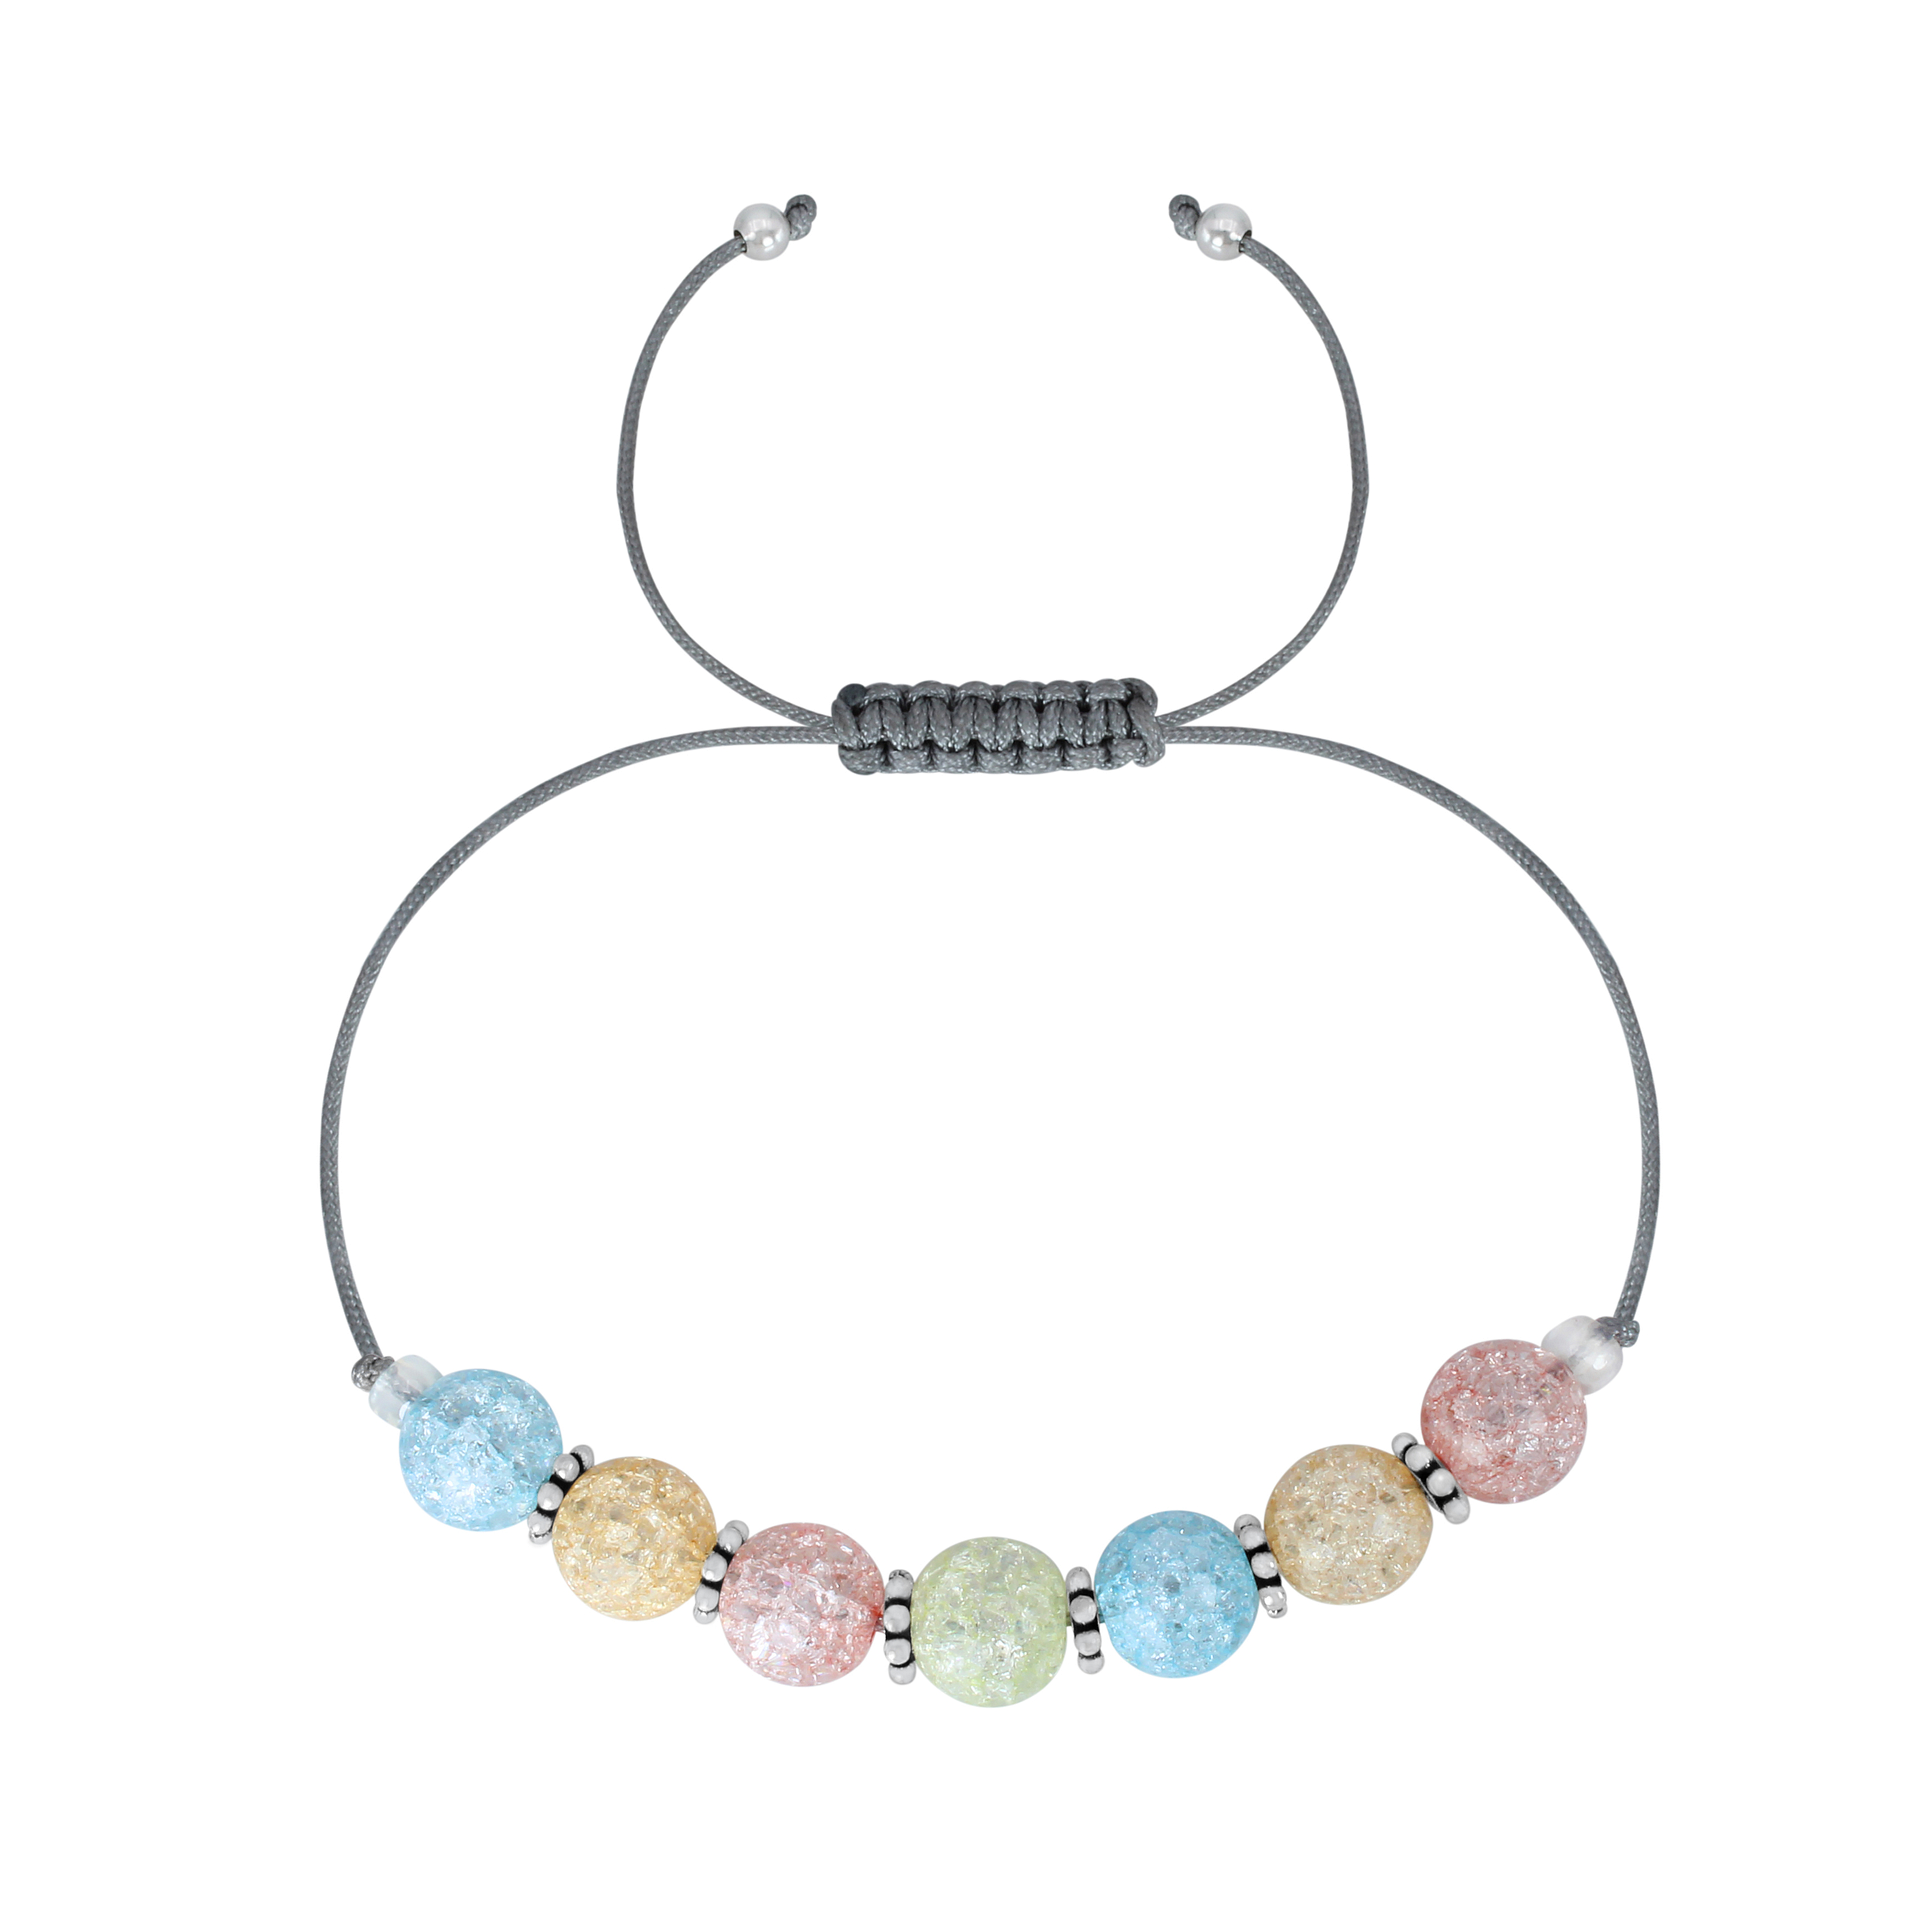 Women's Adjustable Friendship Bracelet Charms Everyday Fashion Pendants  Jewelry